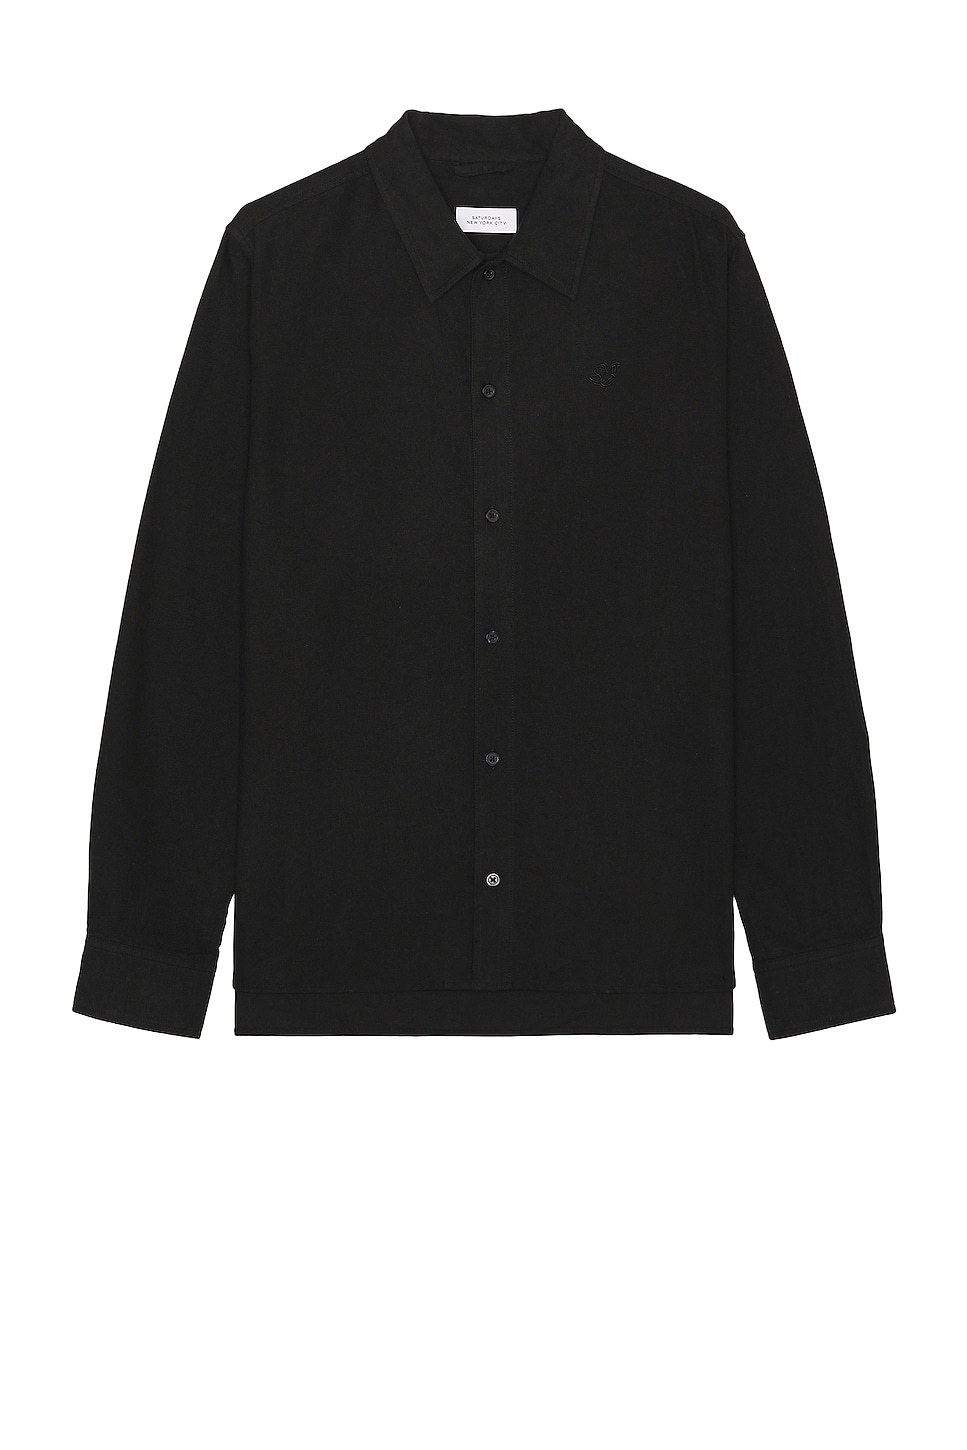 Рубашка SATURDAYS NYC Broome Flannel, черный цена и фото